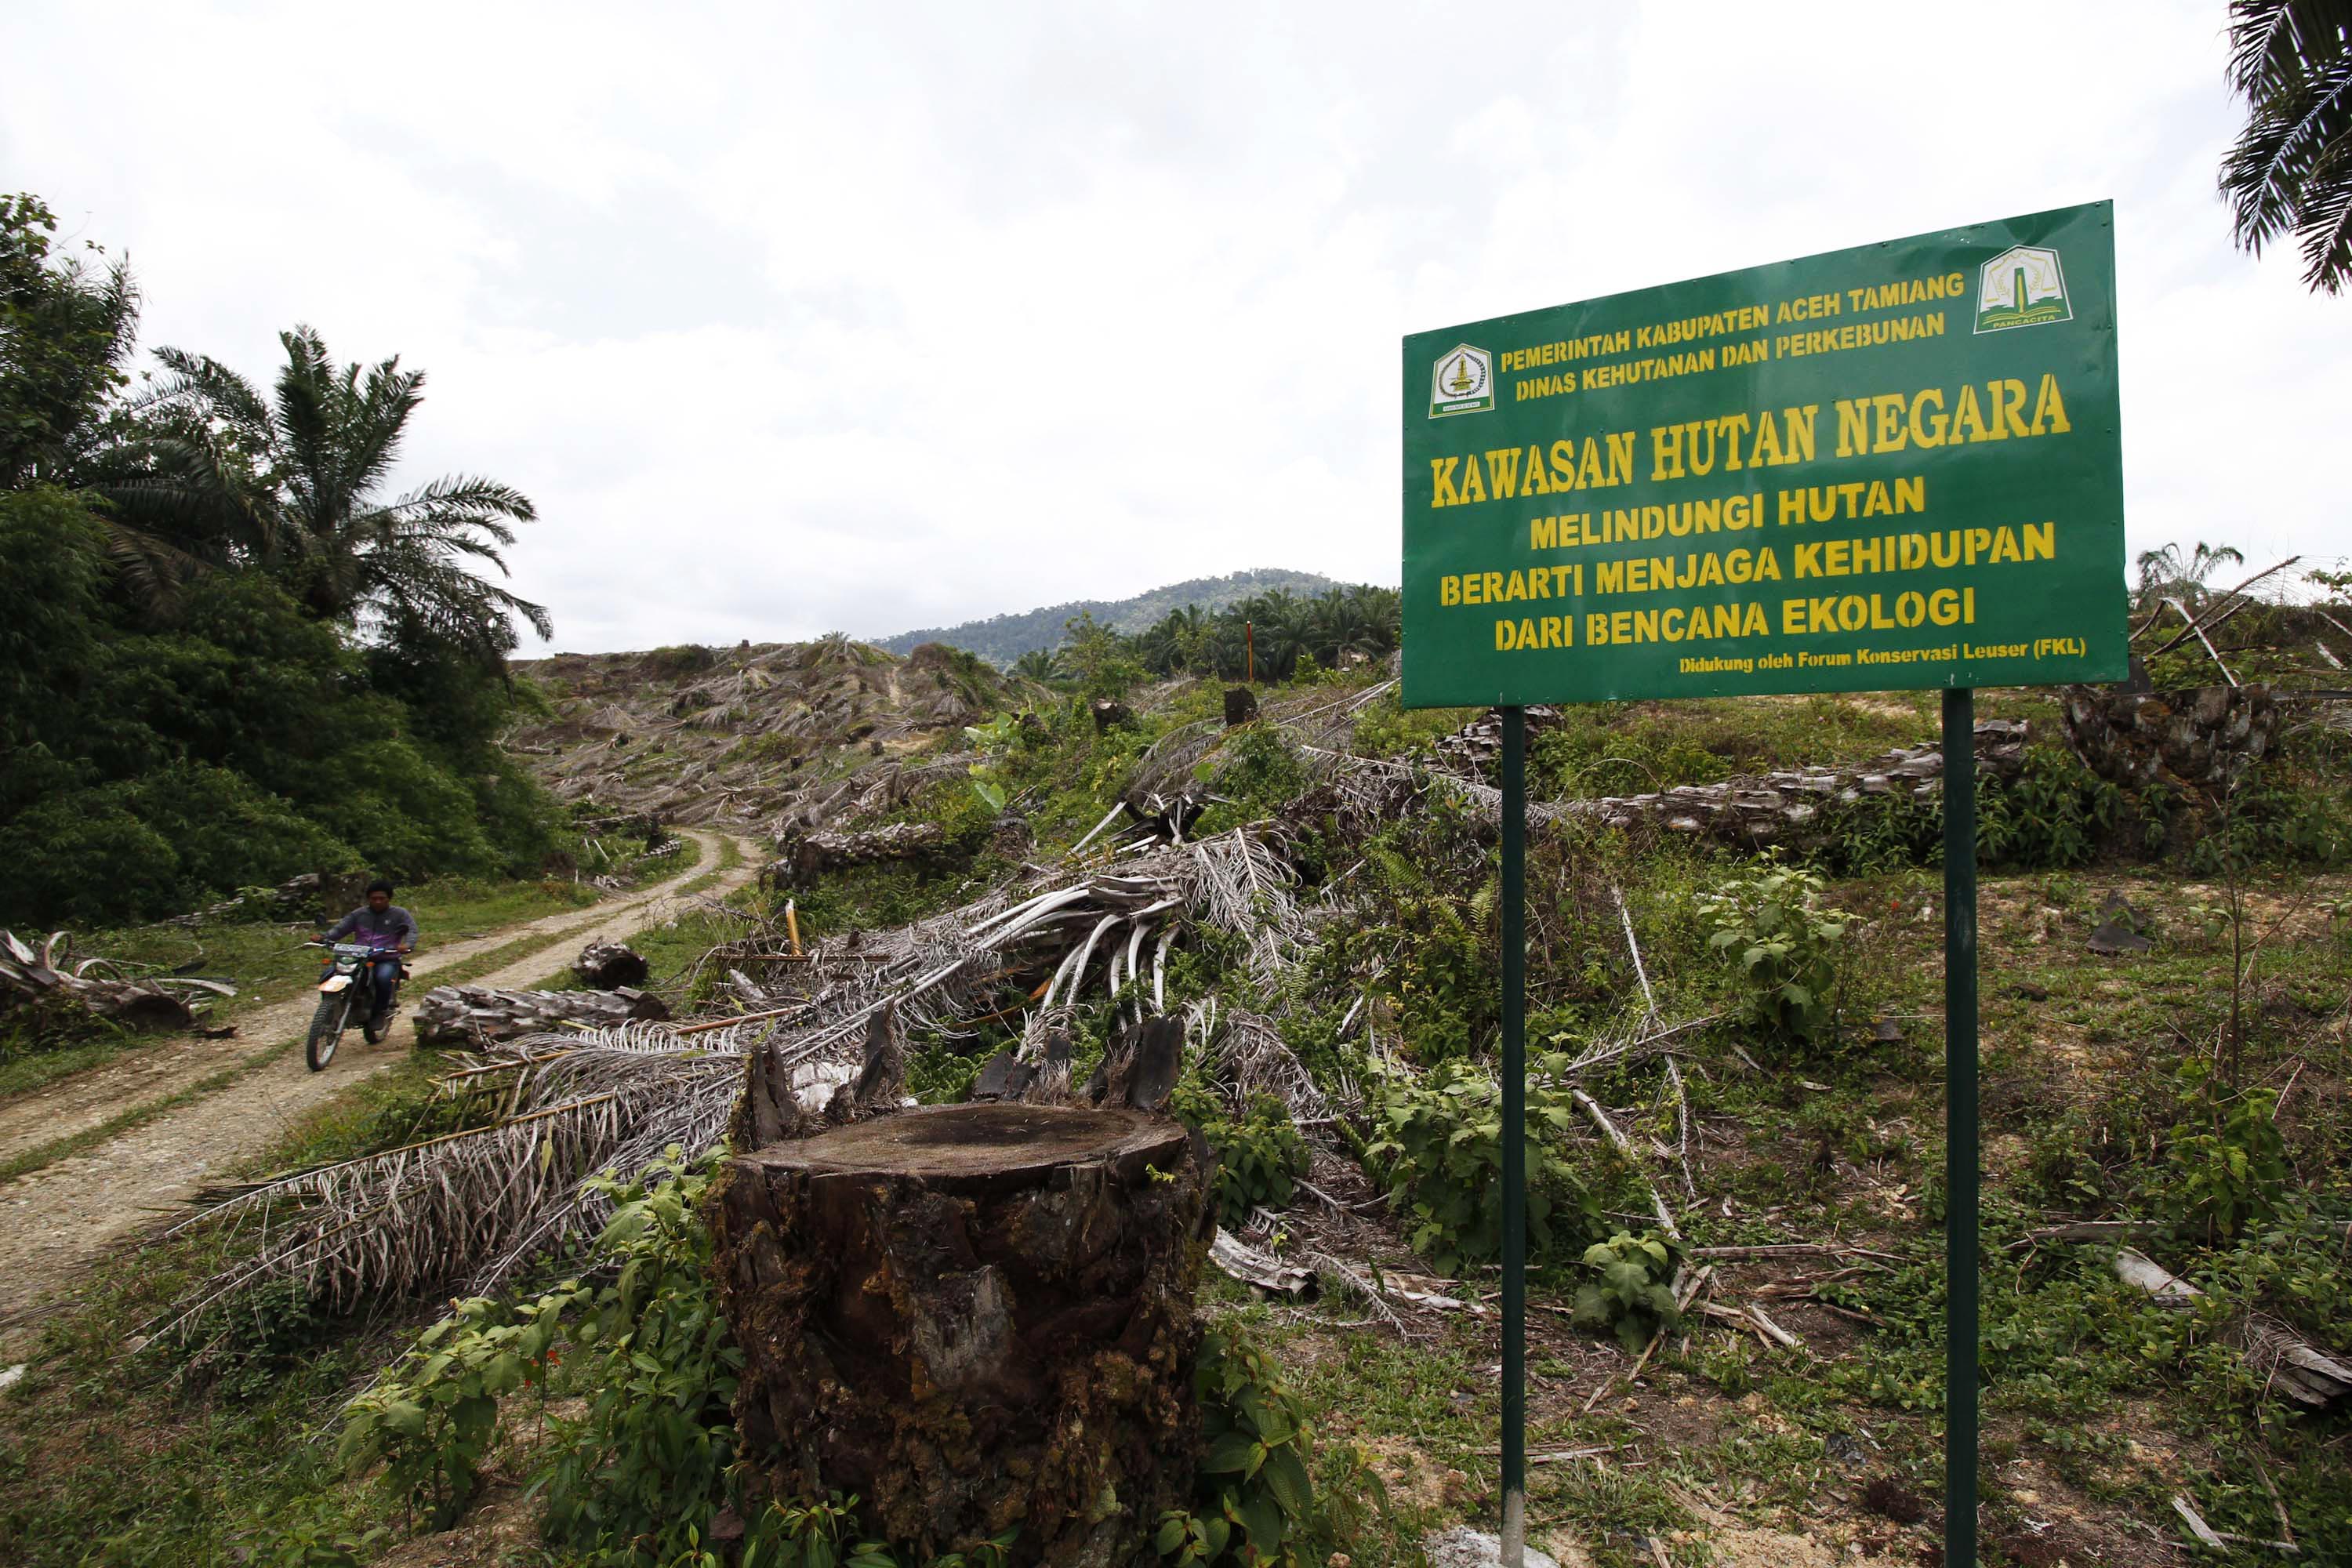 Pemusnahan kebun sawit ilegal yang masuk kawasan KEL di Aceh Tamiang, Aceh. Kawasan ini akan dikembalikan fungsinya sebagai hutan lindung. Foto: Junaidi Hanafiah